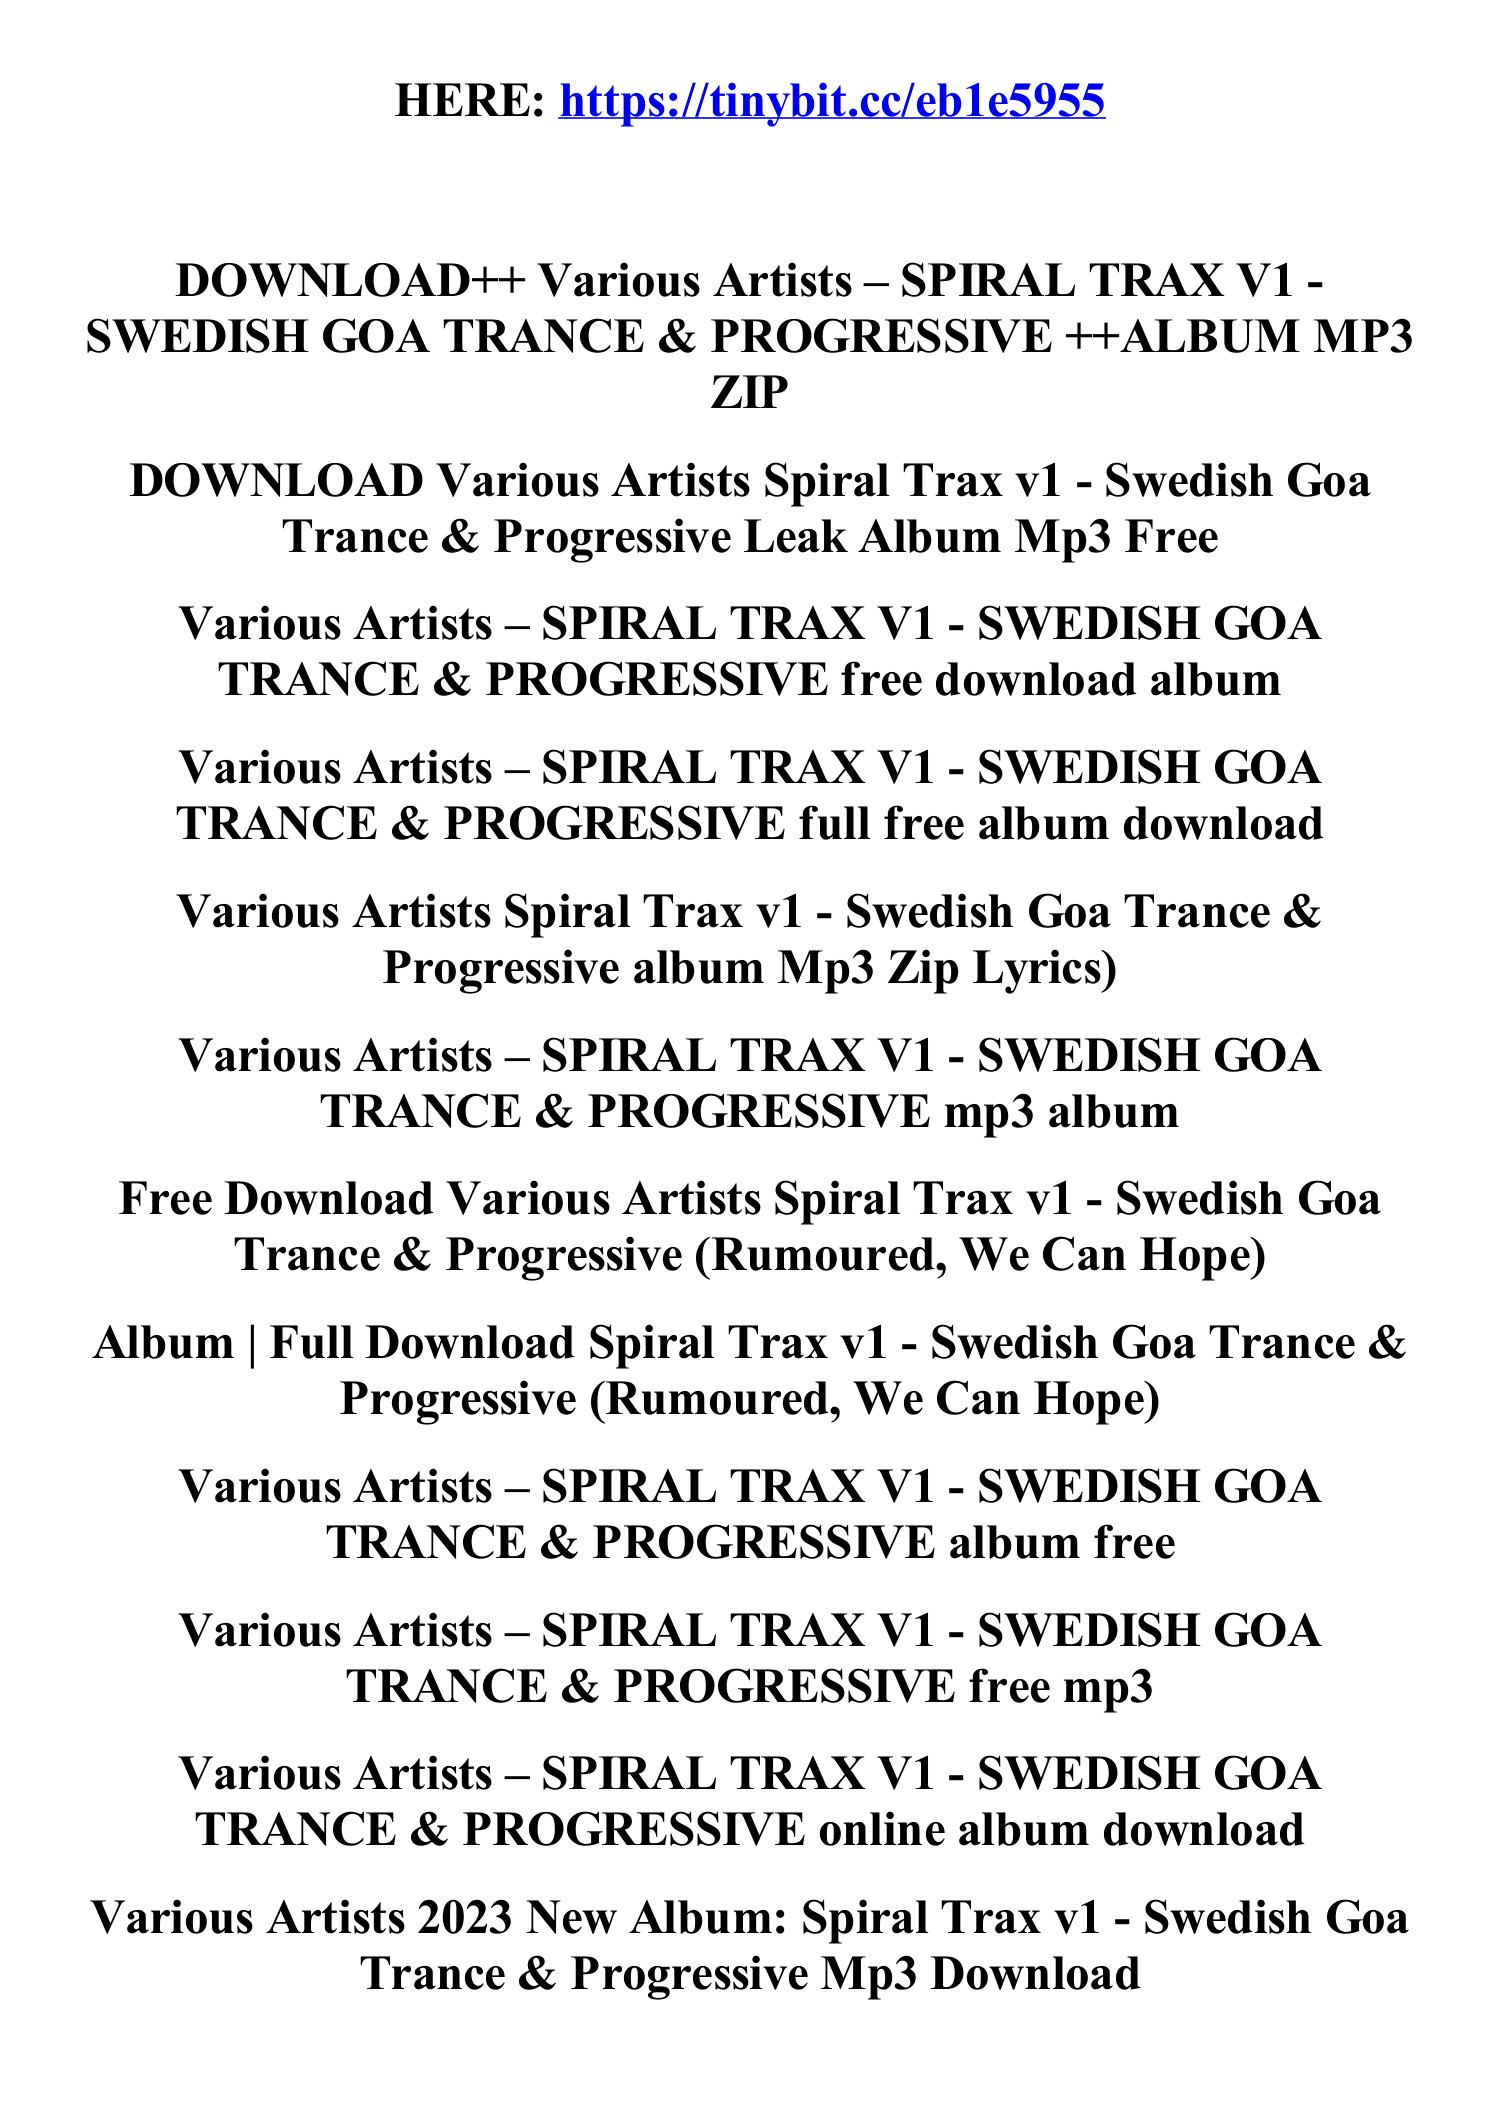 download_various_artists_spiral_trax_v1_swedish_goa_trance_progressive_album_mp3_zip.pdf  | DocDroid